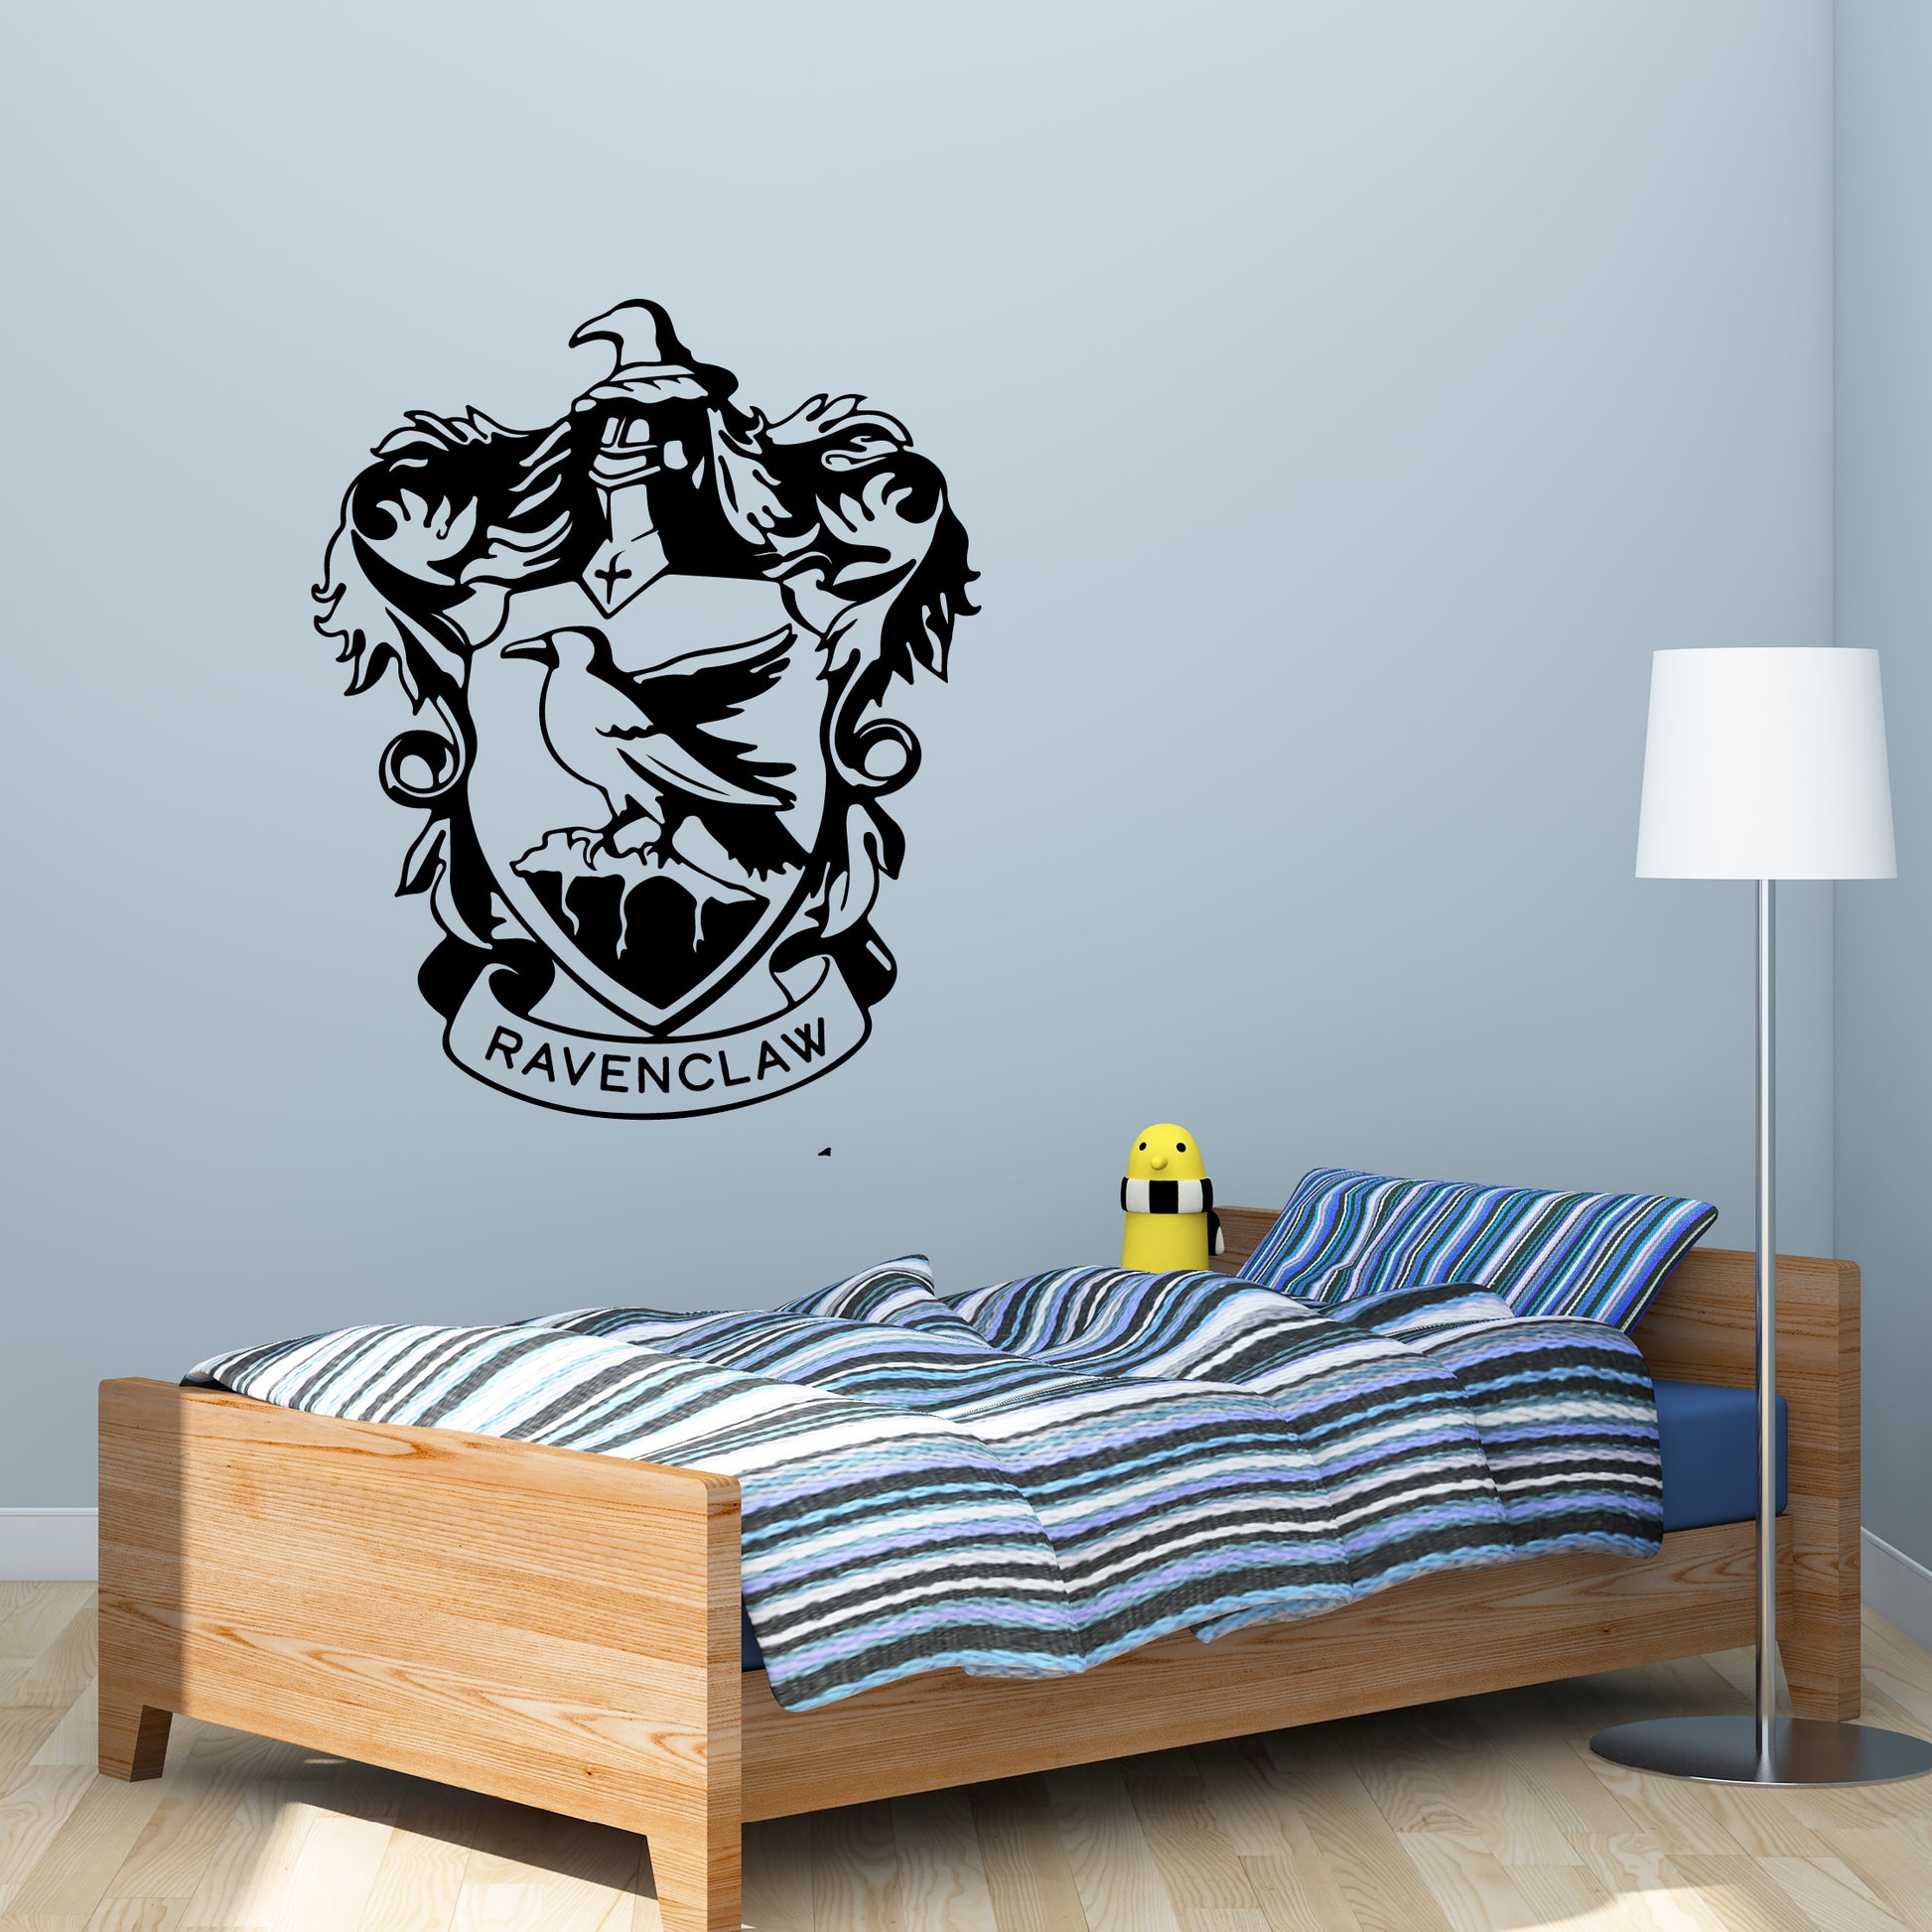 Harry Potter - Slytherin Hufflepuff Gryffindor Ravenclaw emblem wall graphics